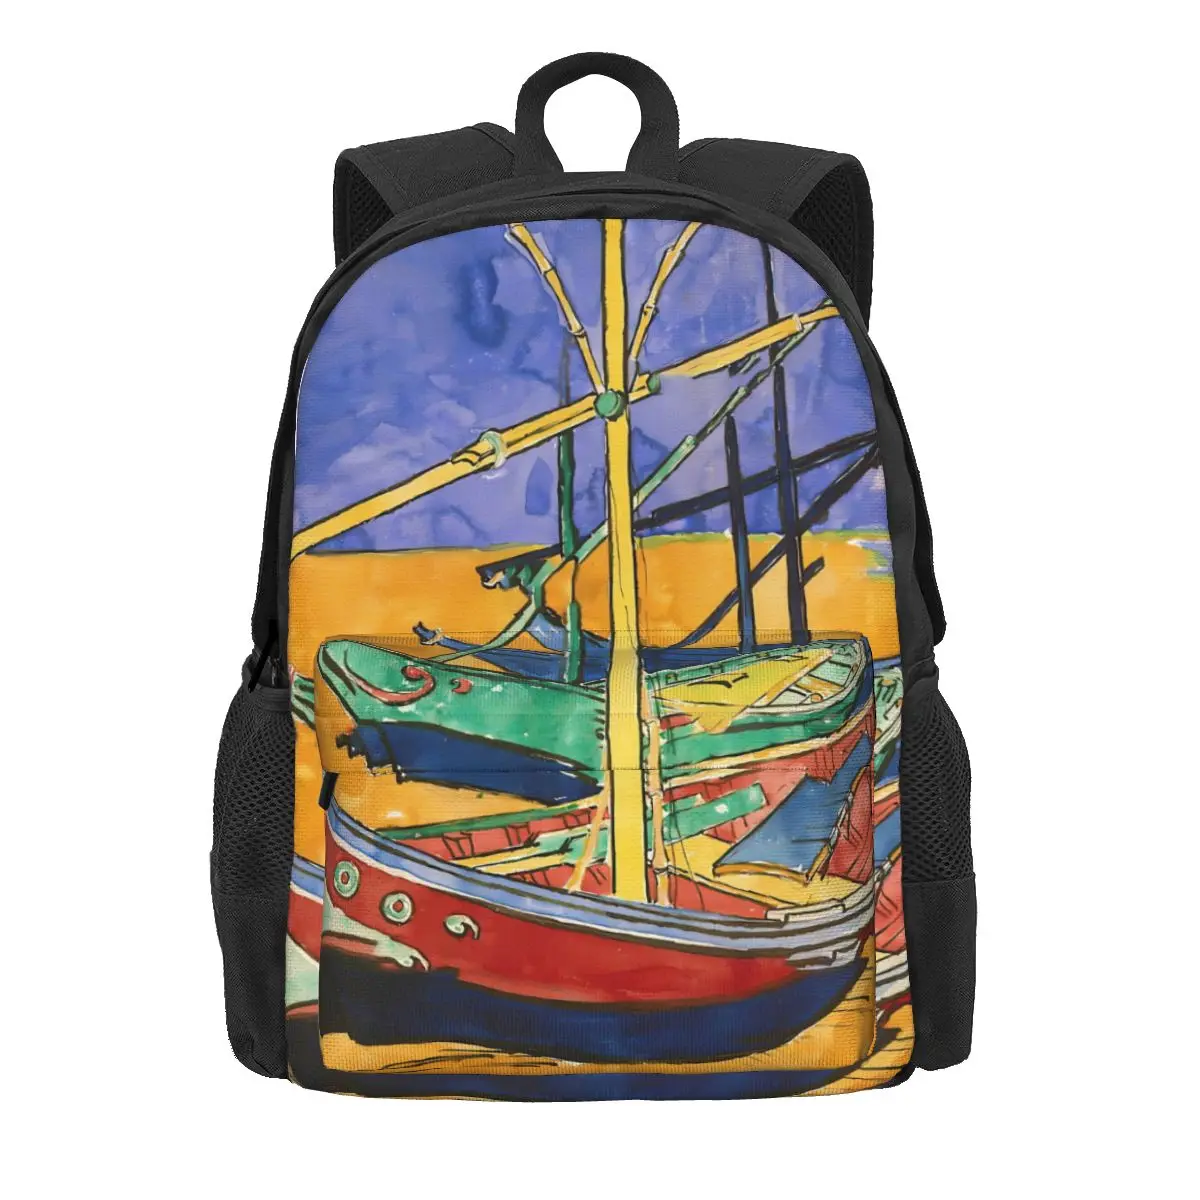 

Vincent Van Gogh Backpack Fishing Boats University Backpacks Student Unisex Fashion School Bags Quality Lightweight Rucksack